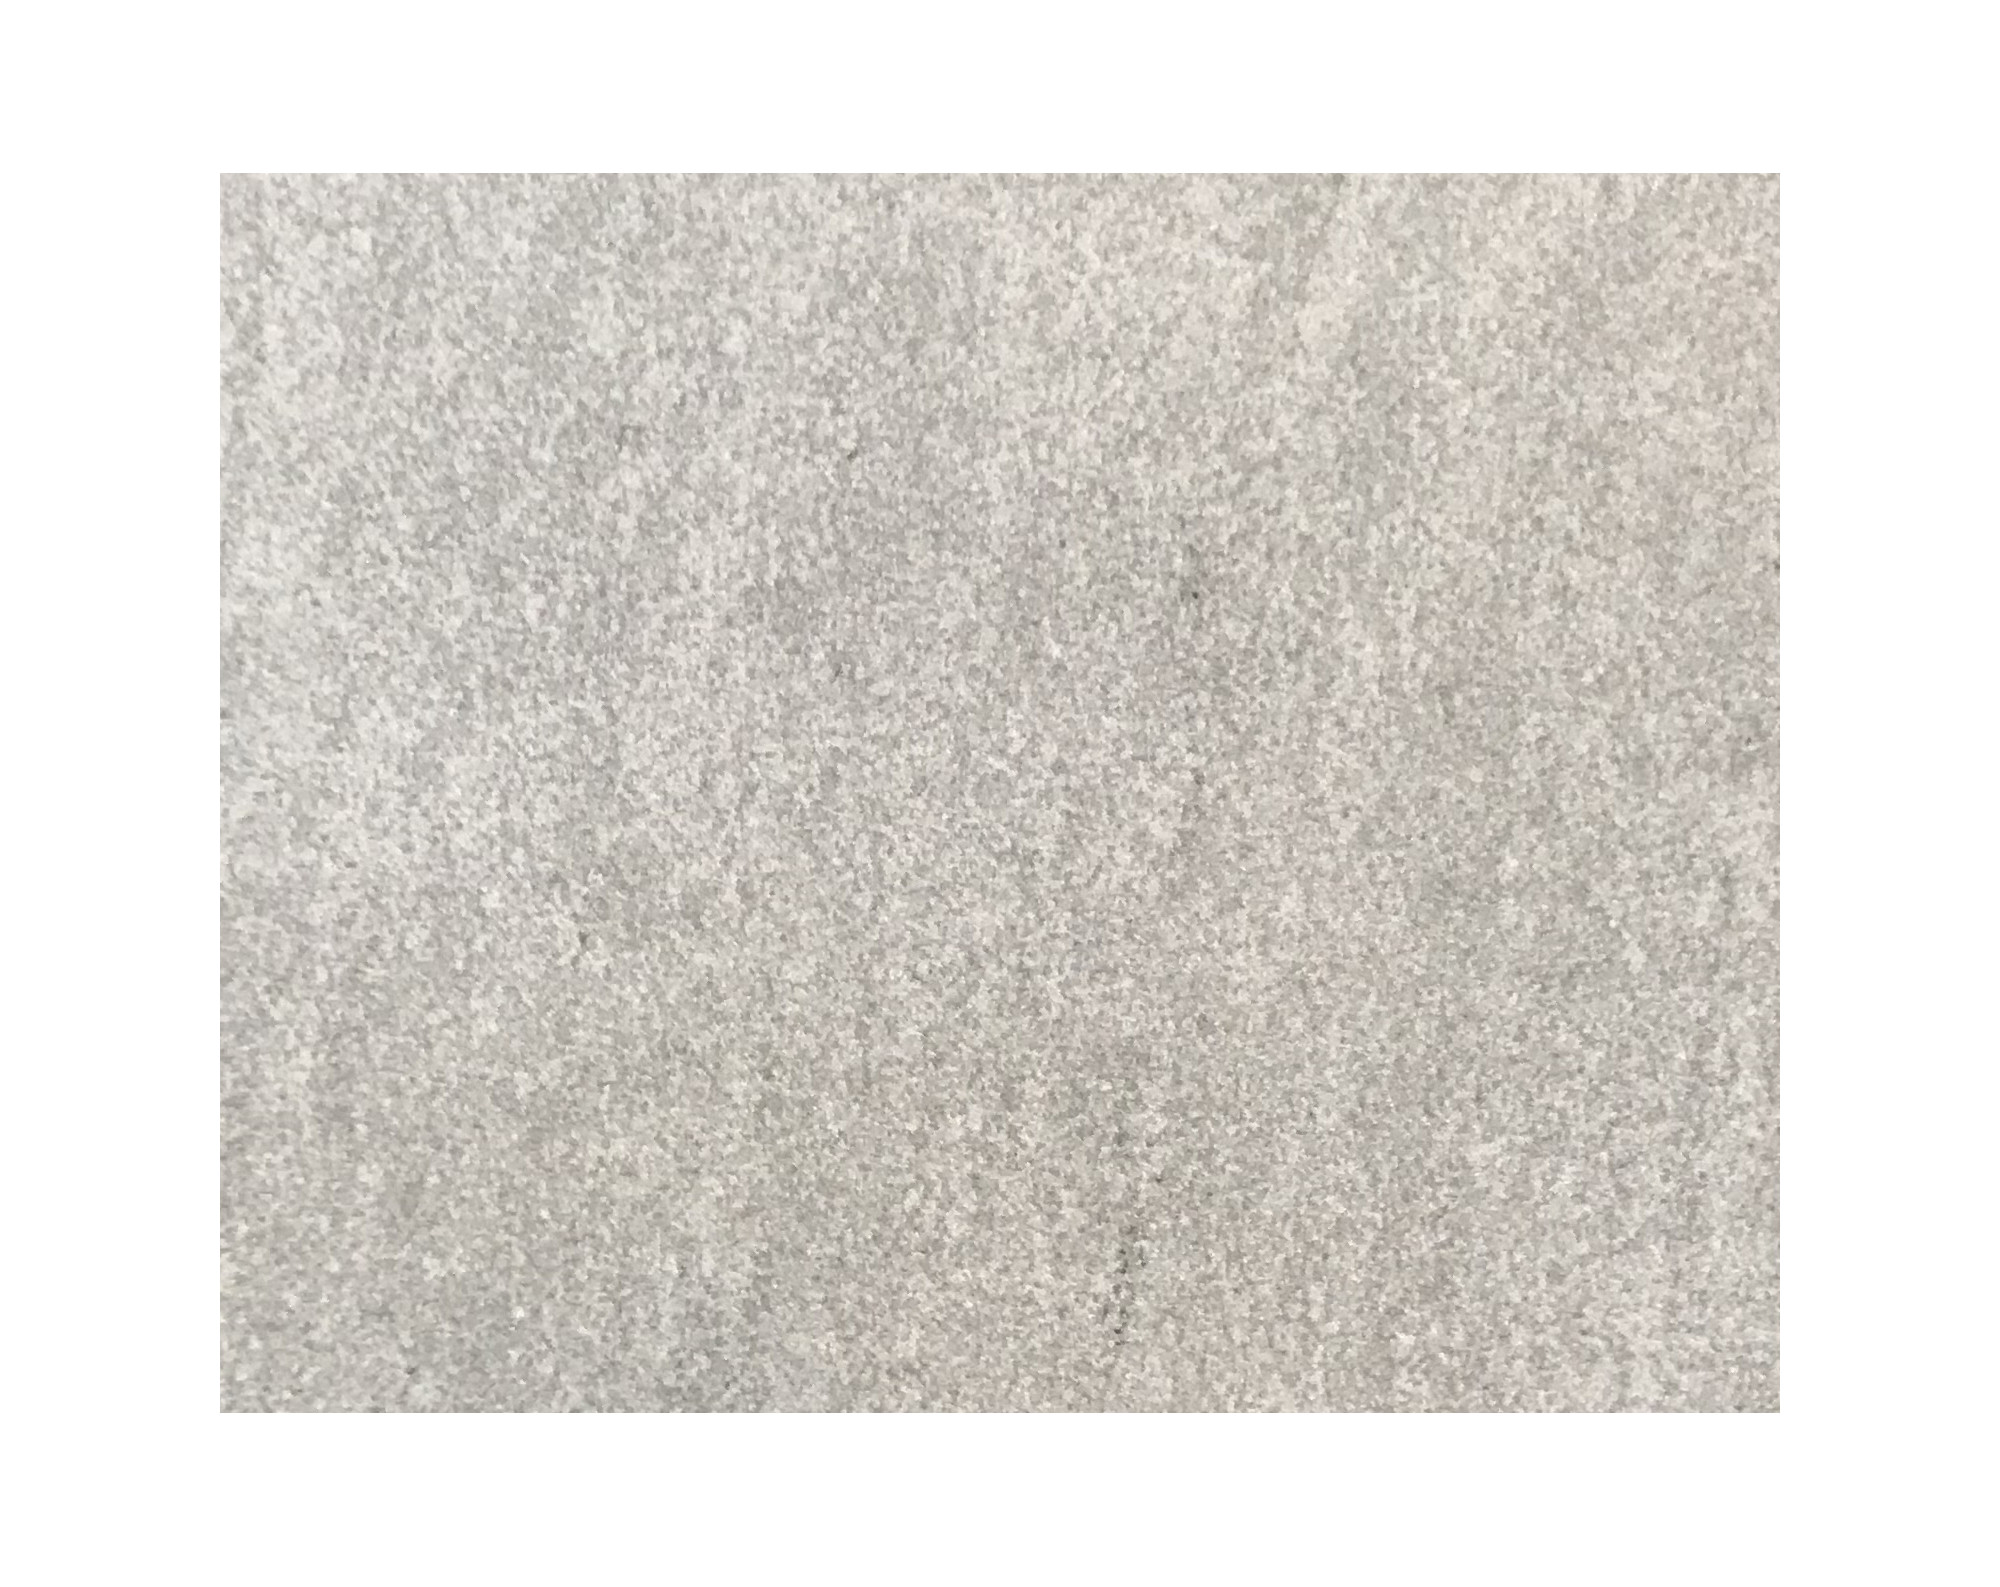 Harmo roc firenzeset, keramiek-serie, ovaal d:5,00mx9,00m, zand grijs, keramisch porselein